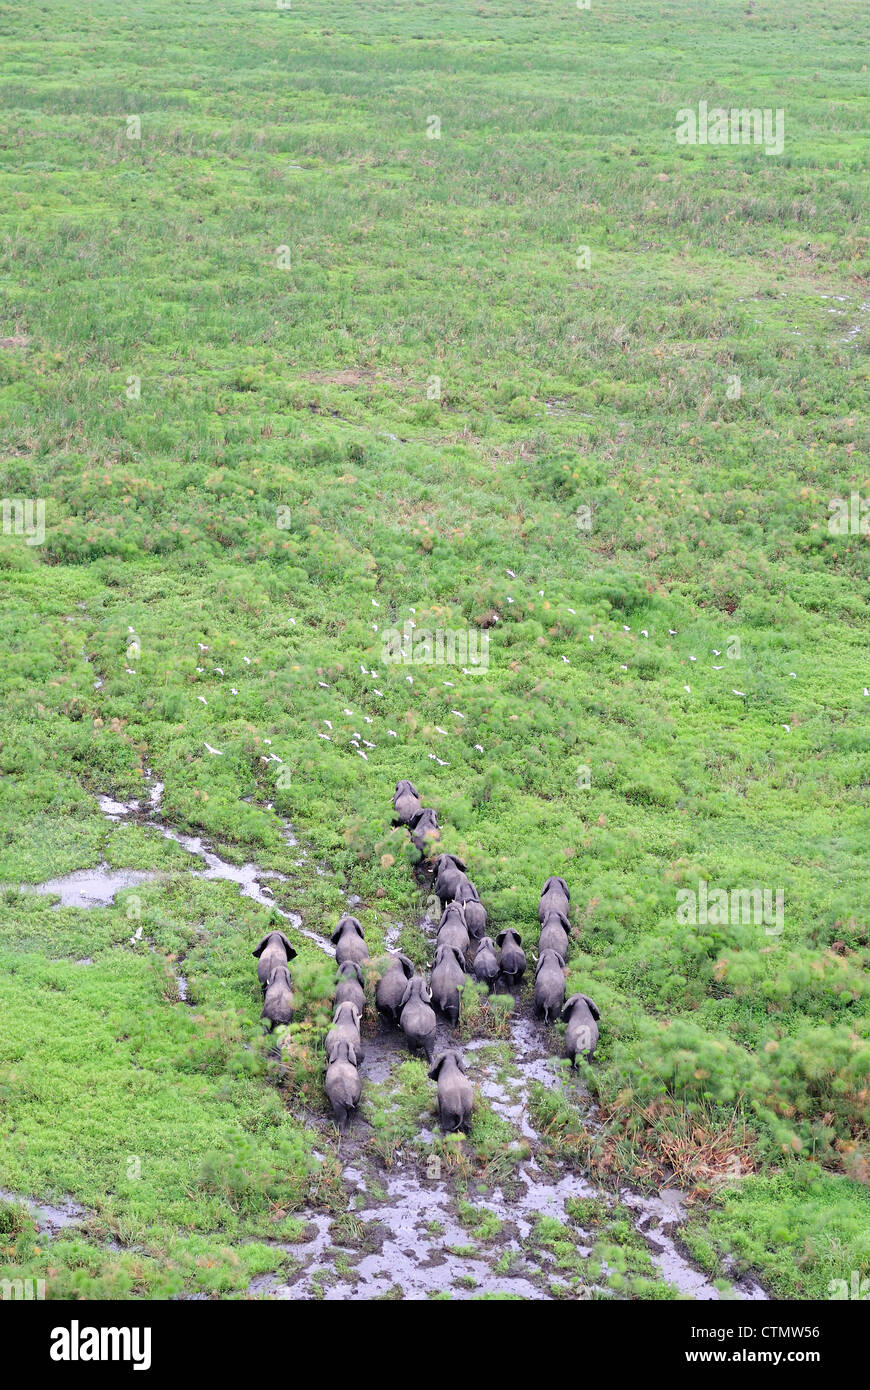 Elefanten in Shambe Game Reserve westlich von dem Nil, Republik Südsudan Stockfoto